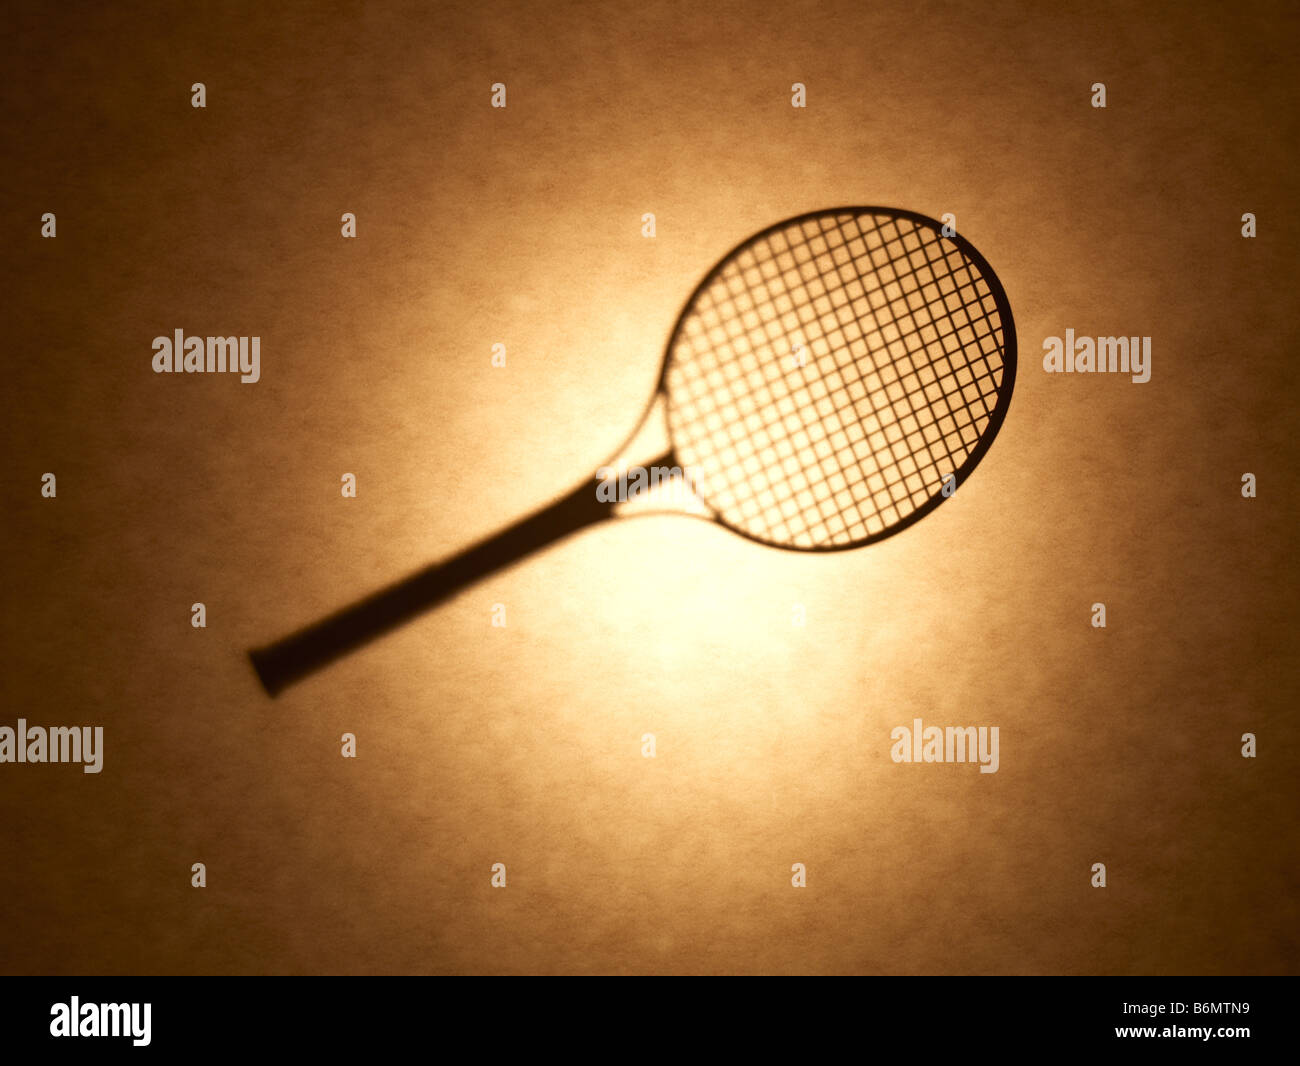 Tennis Racket Stock Photo